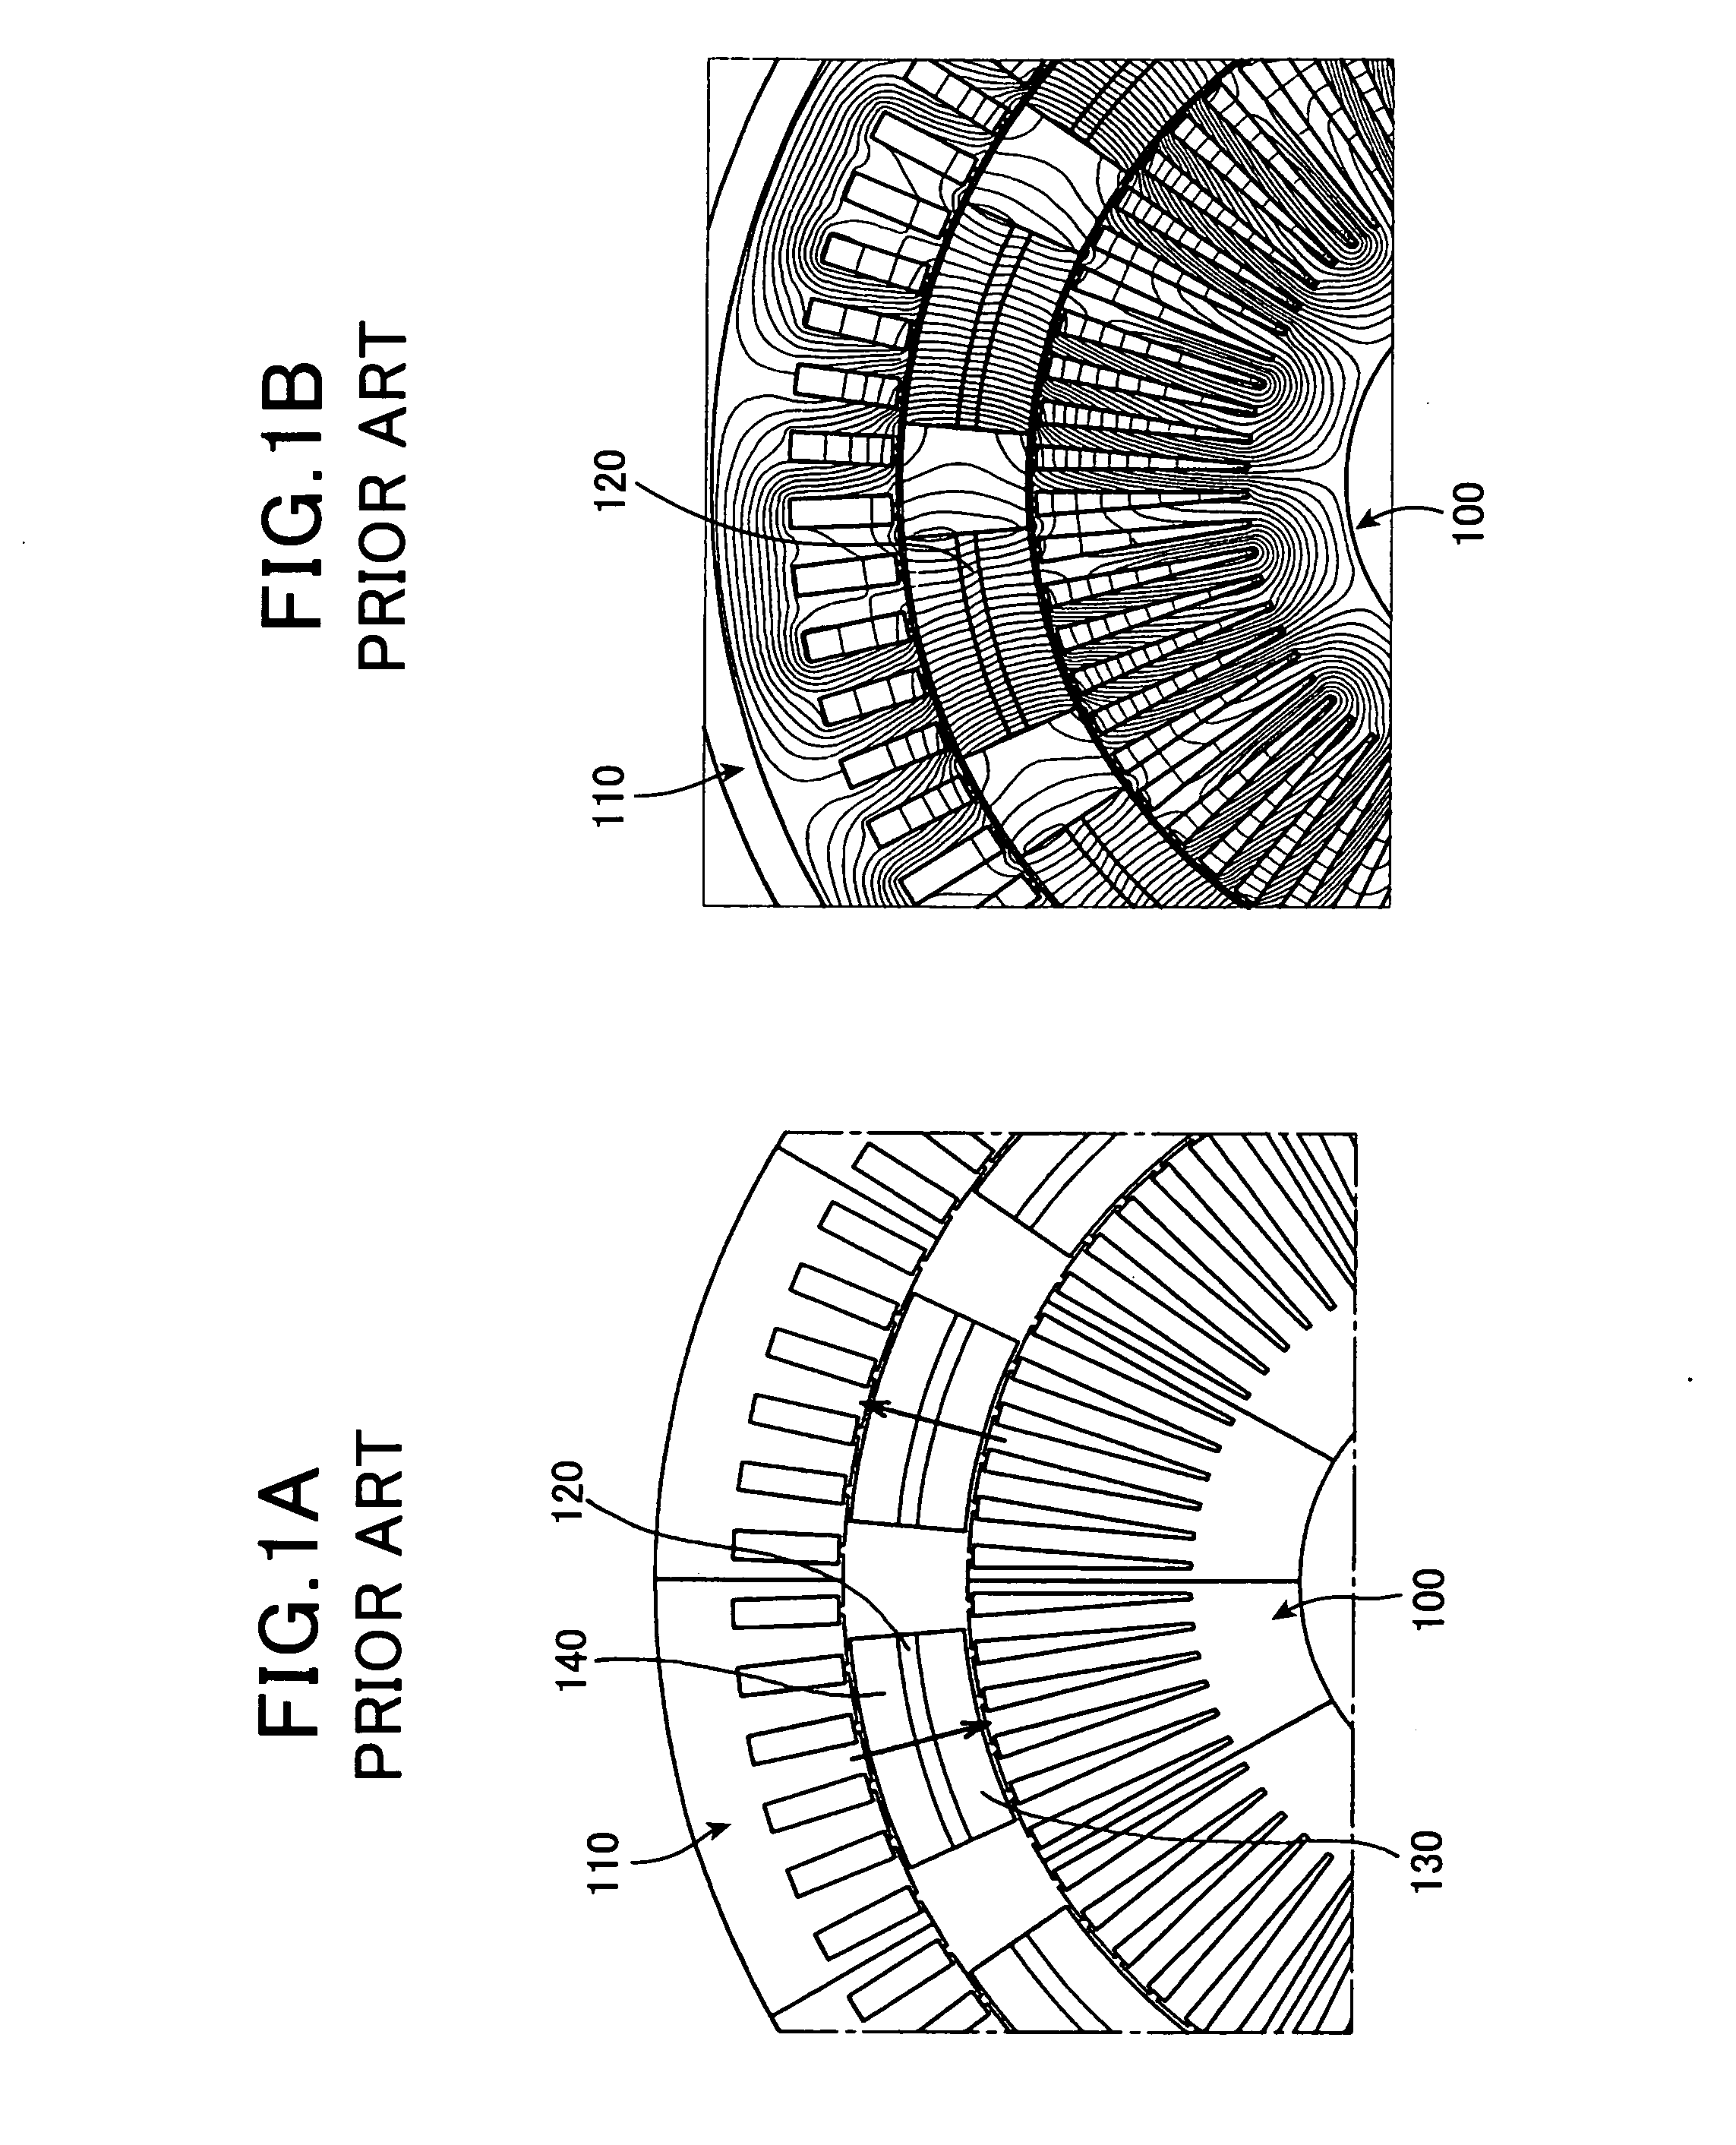 Double-stator motor